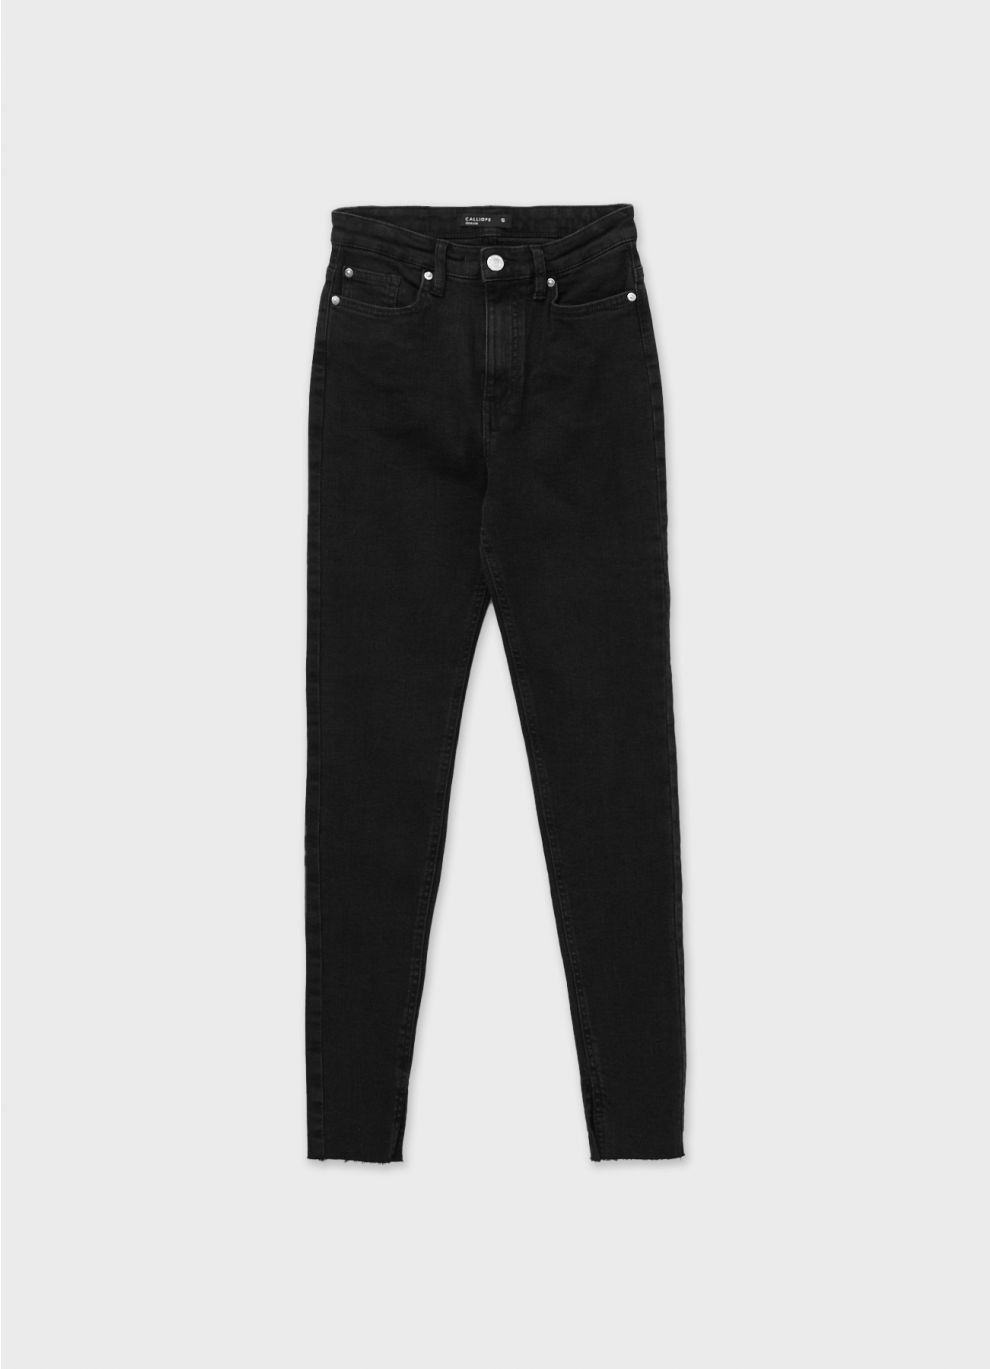 Calliope - denim black jeans - Buy Online